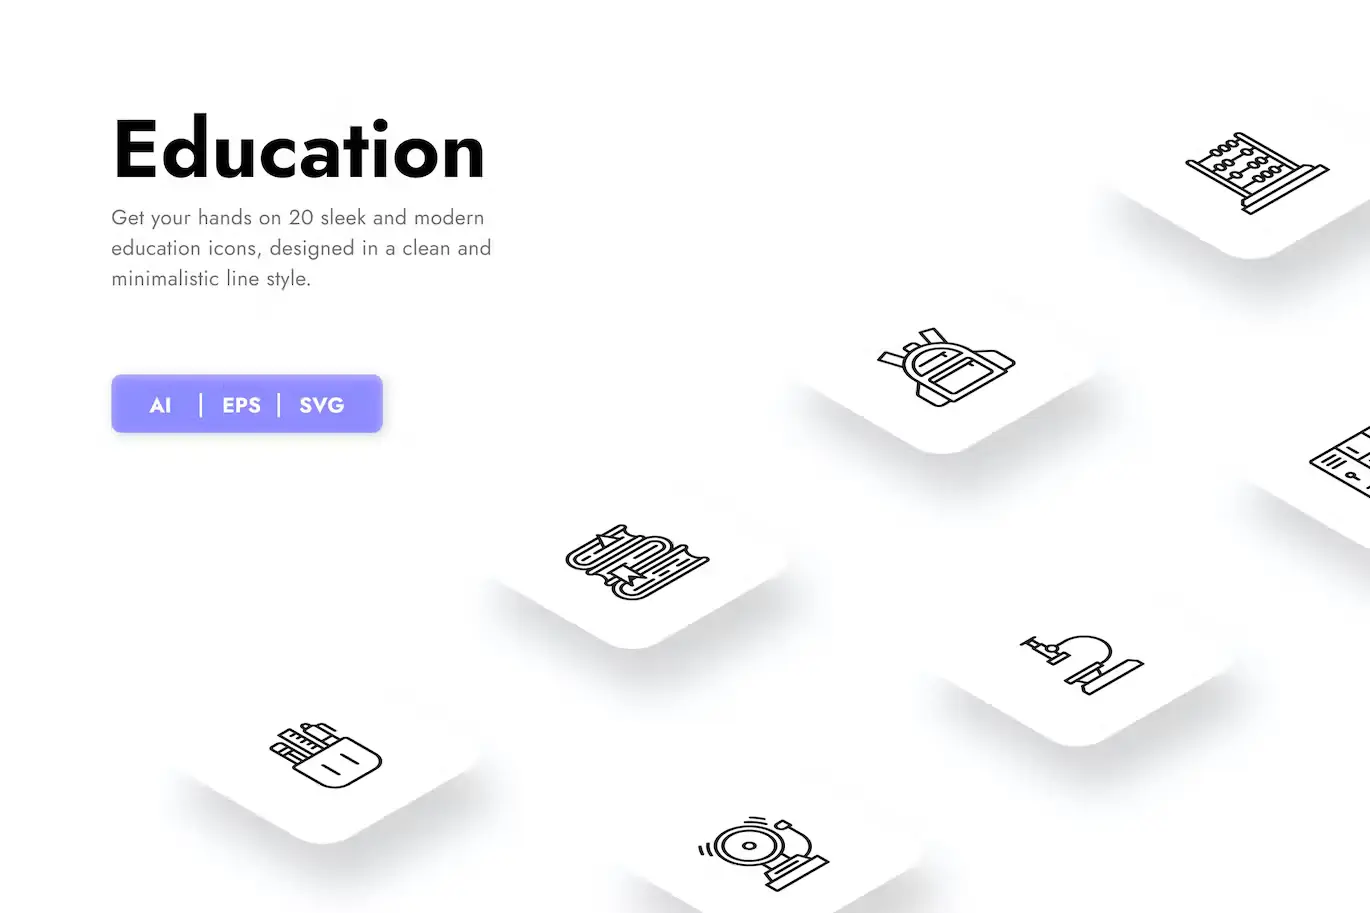 Sleek and Modern Education Icons